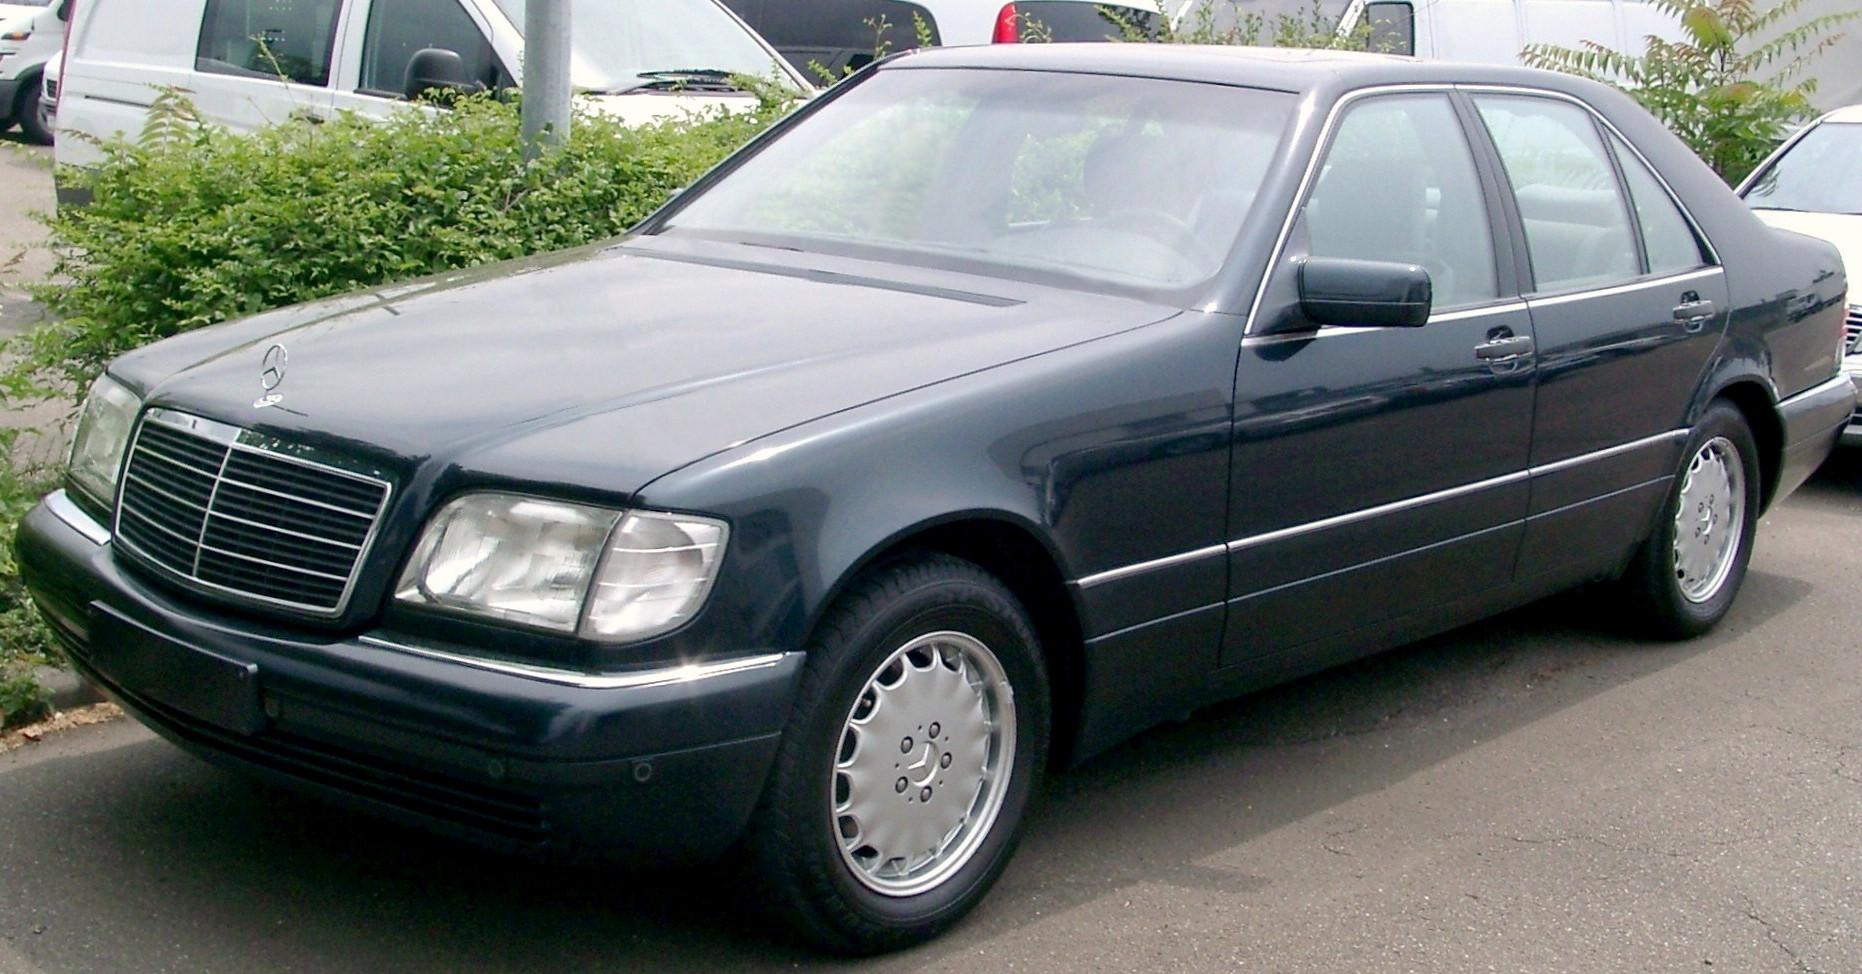 http://upload.wikimedia.org/wikipedia/commons/d/d6/Mercedes_W140_front_20070609.jpg